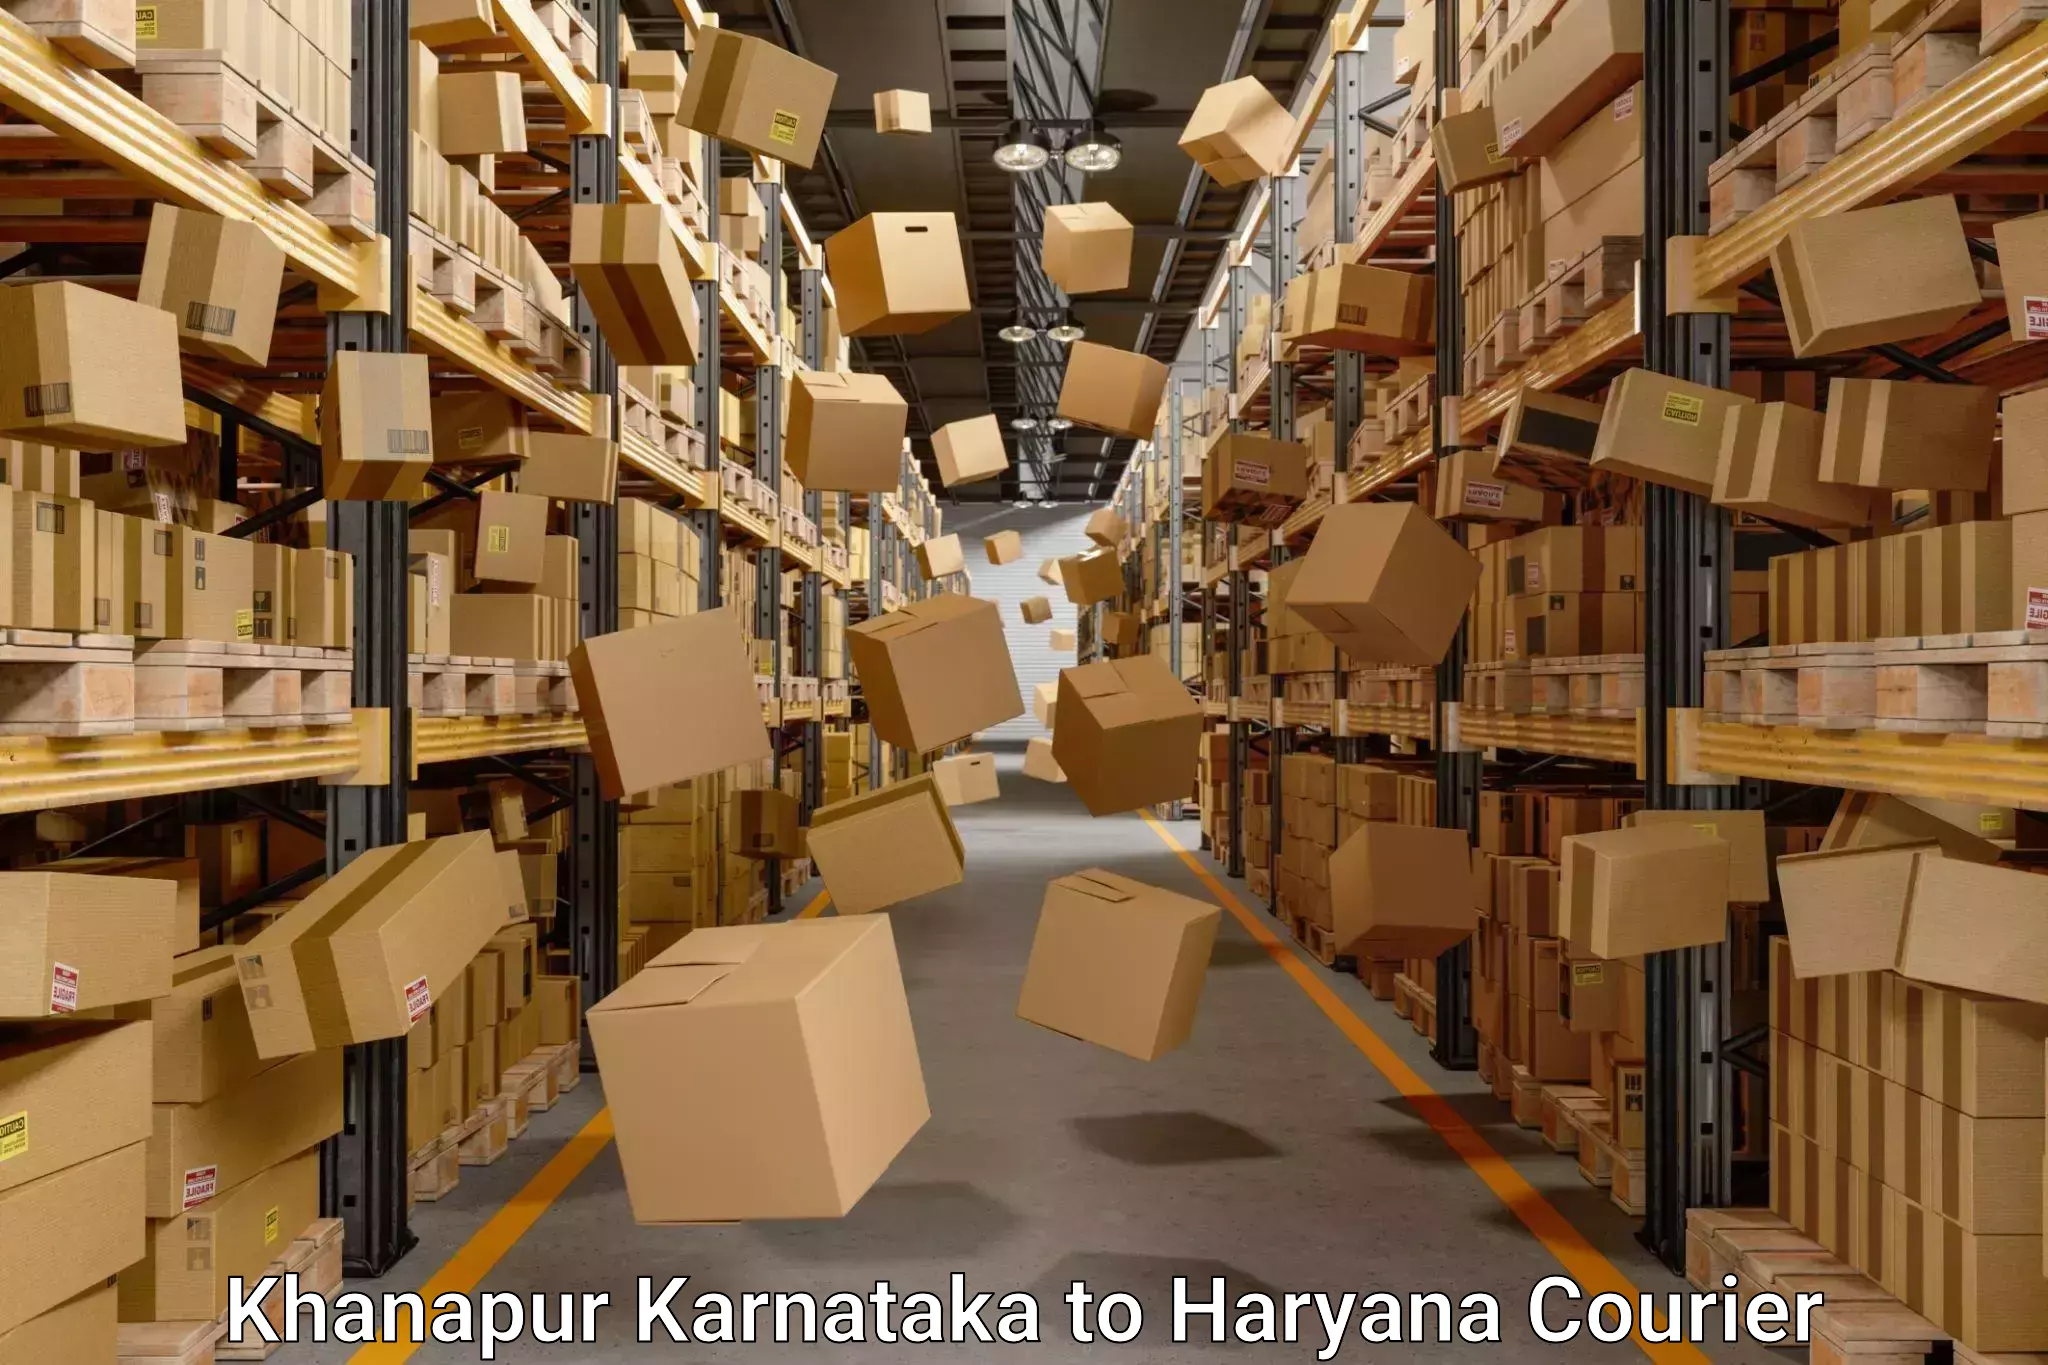 Home moving specialists Khanapur Karnataka to Panipat